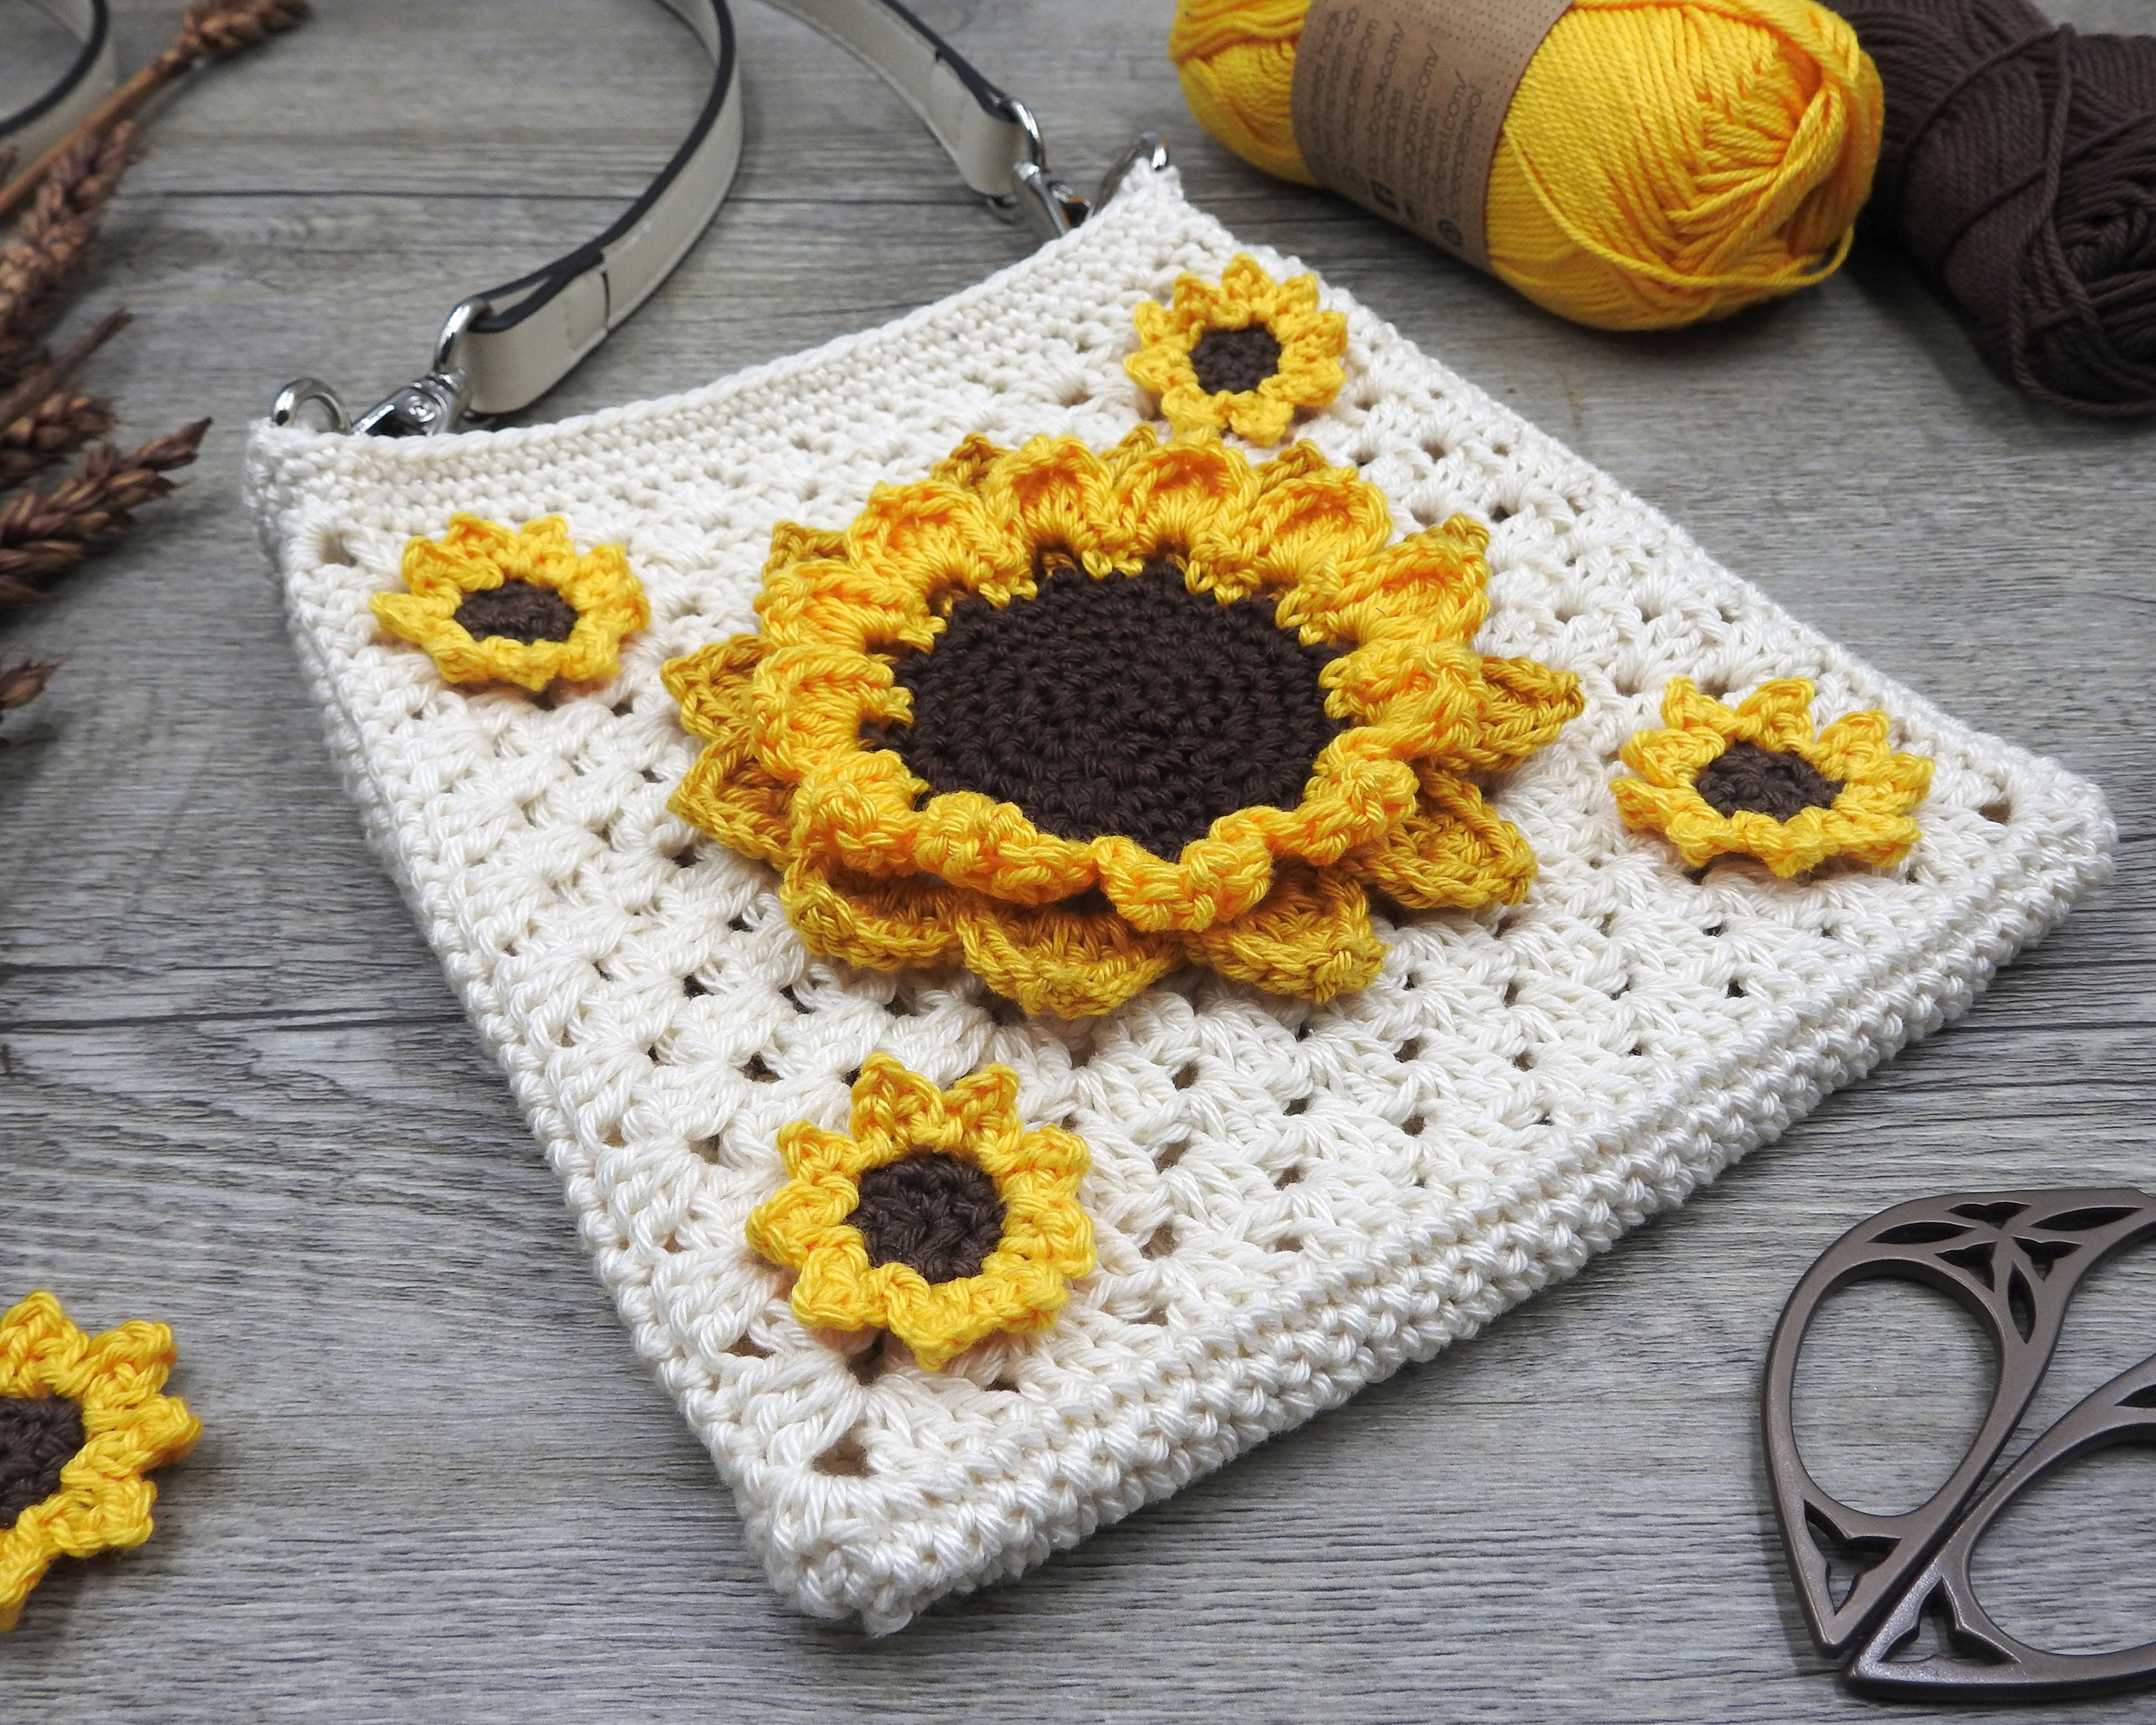 Sunflower Drawstring Backpack Crochet PDF PATTERN english 